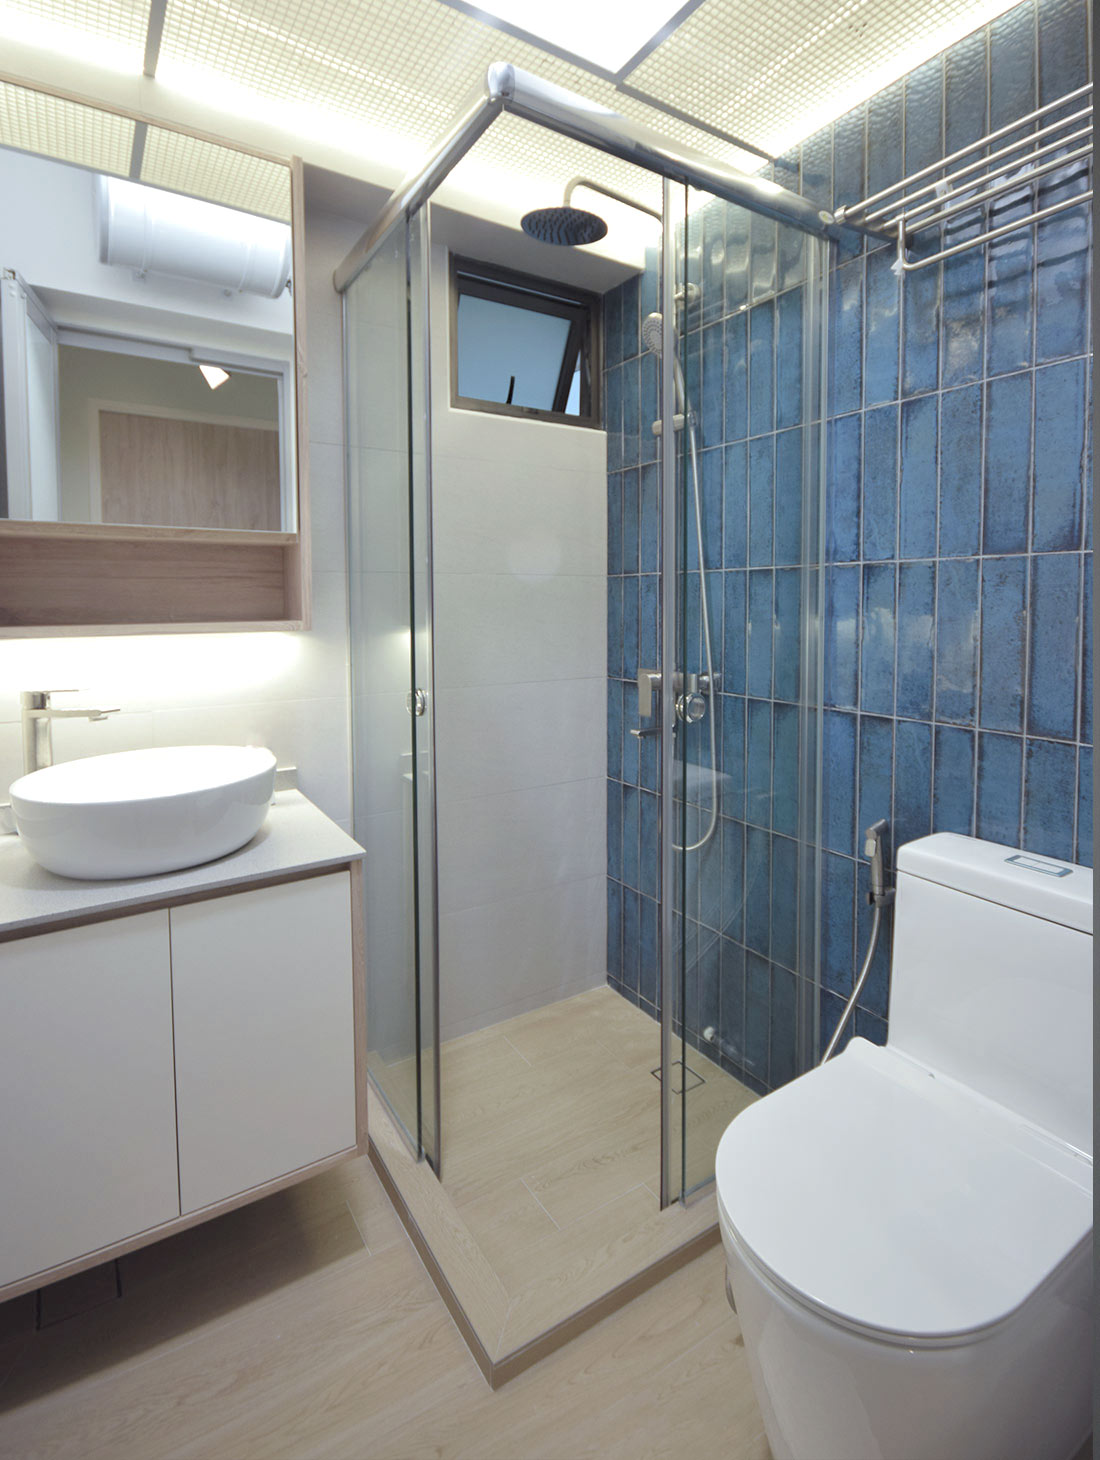 4 Room HDB resale dawson singapore wabi sabi interior design toilet renovation shower with blue subway tiles custom made vanity and overmount sink